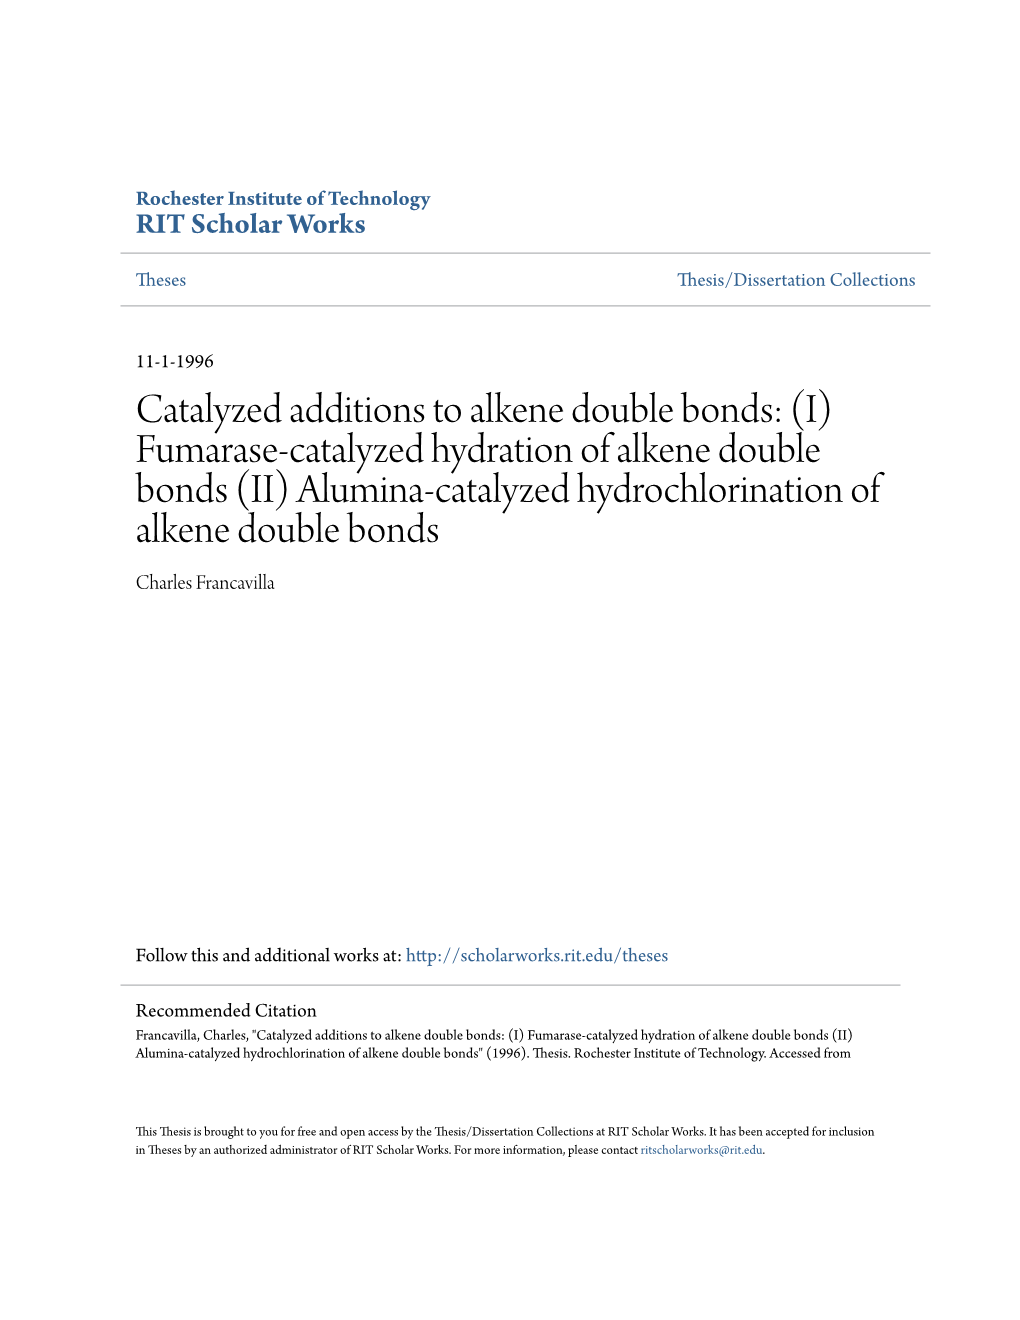 (I) Fumarase-Catalyzed Hydration of Alkene Double Bonds (II) Alumina-Catalyzed Hydrochlorination of Alkene Double Bonds Charles Francavilla